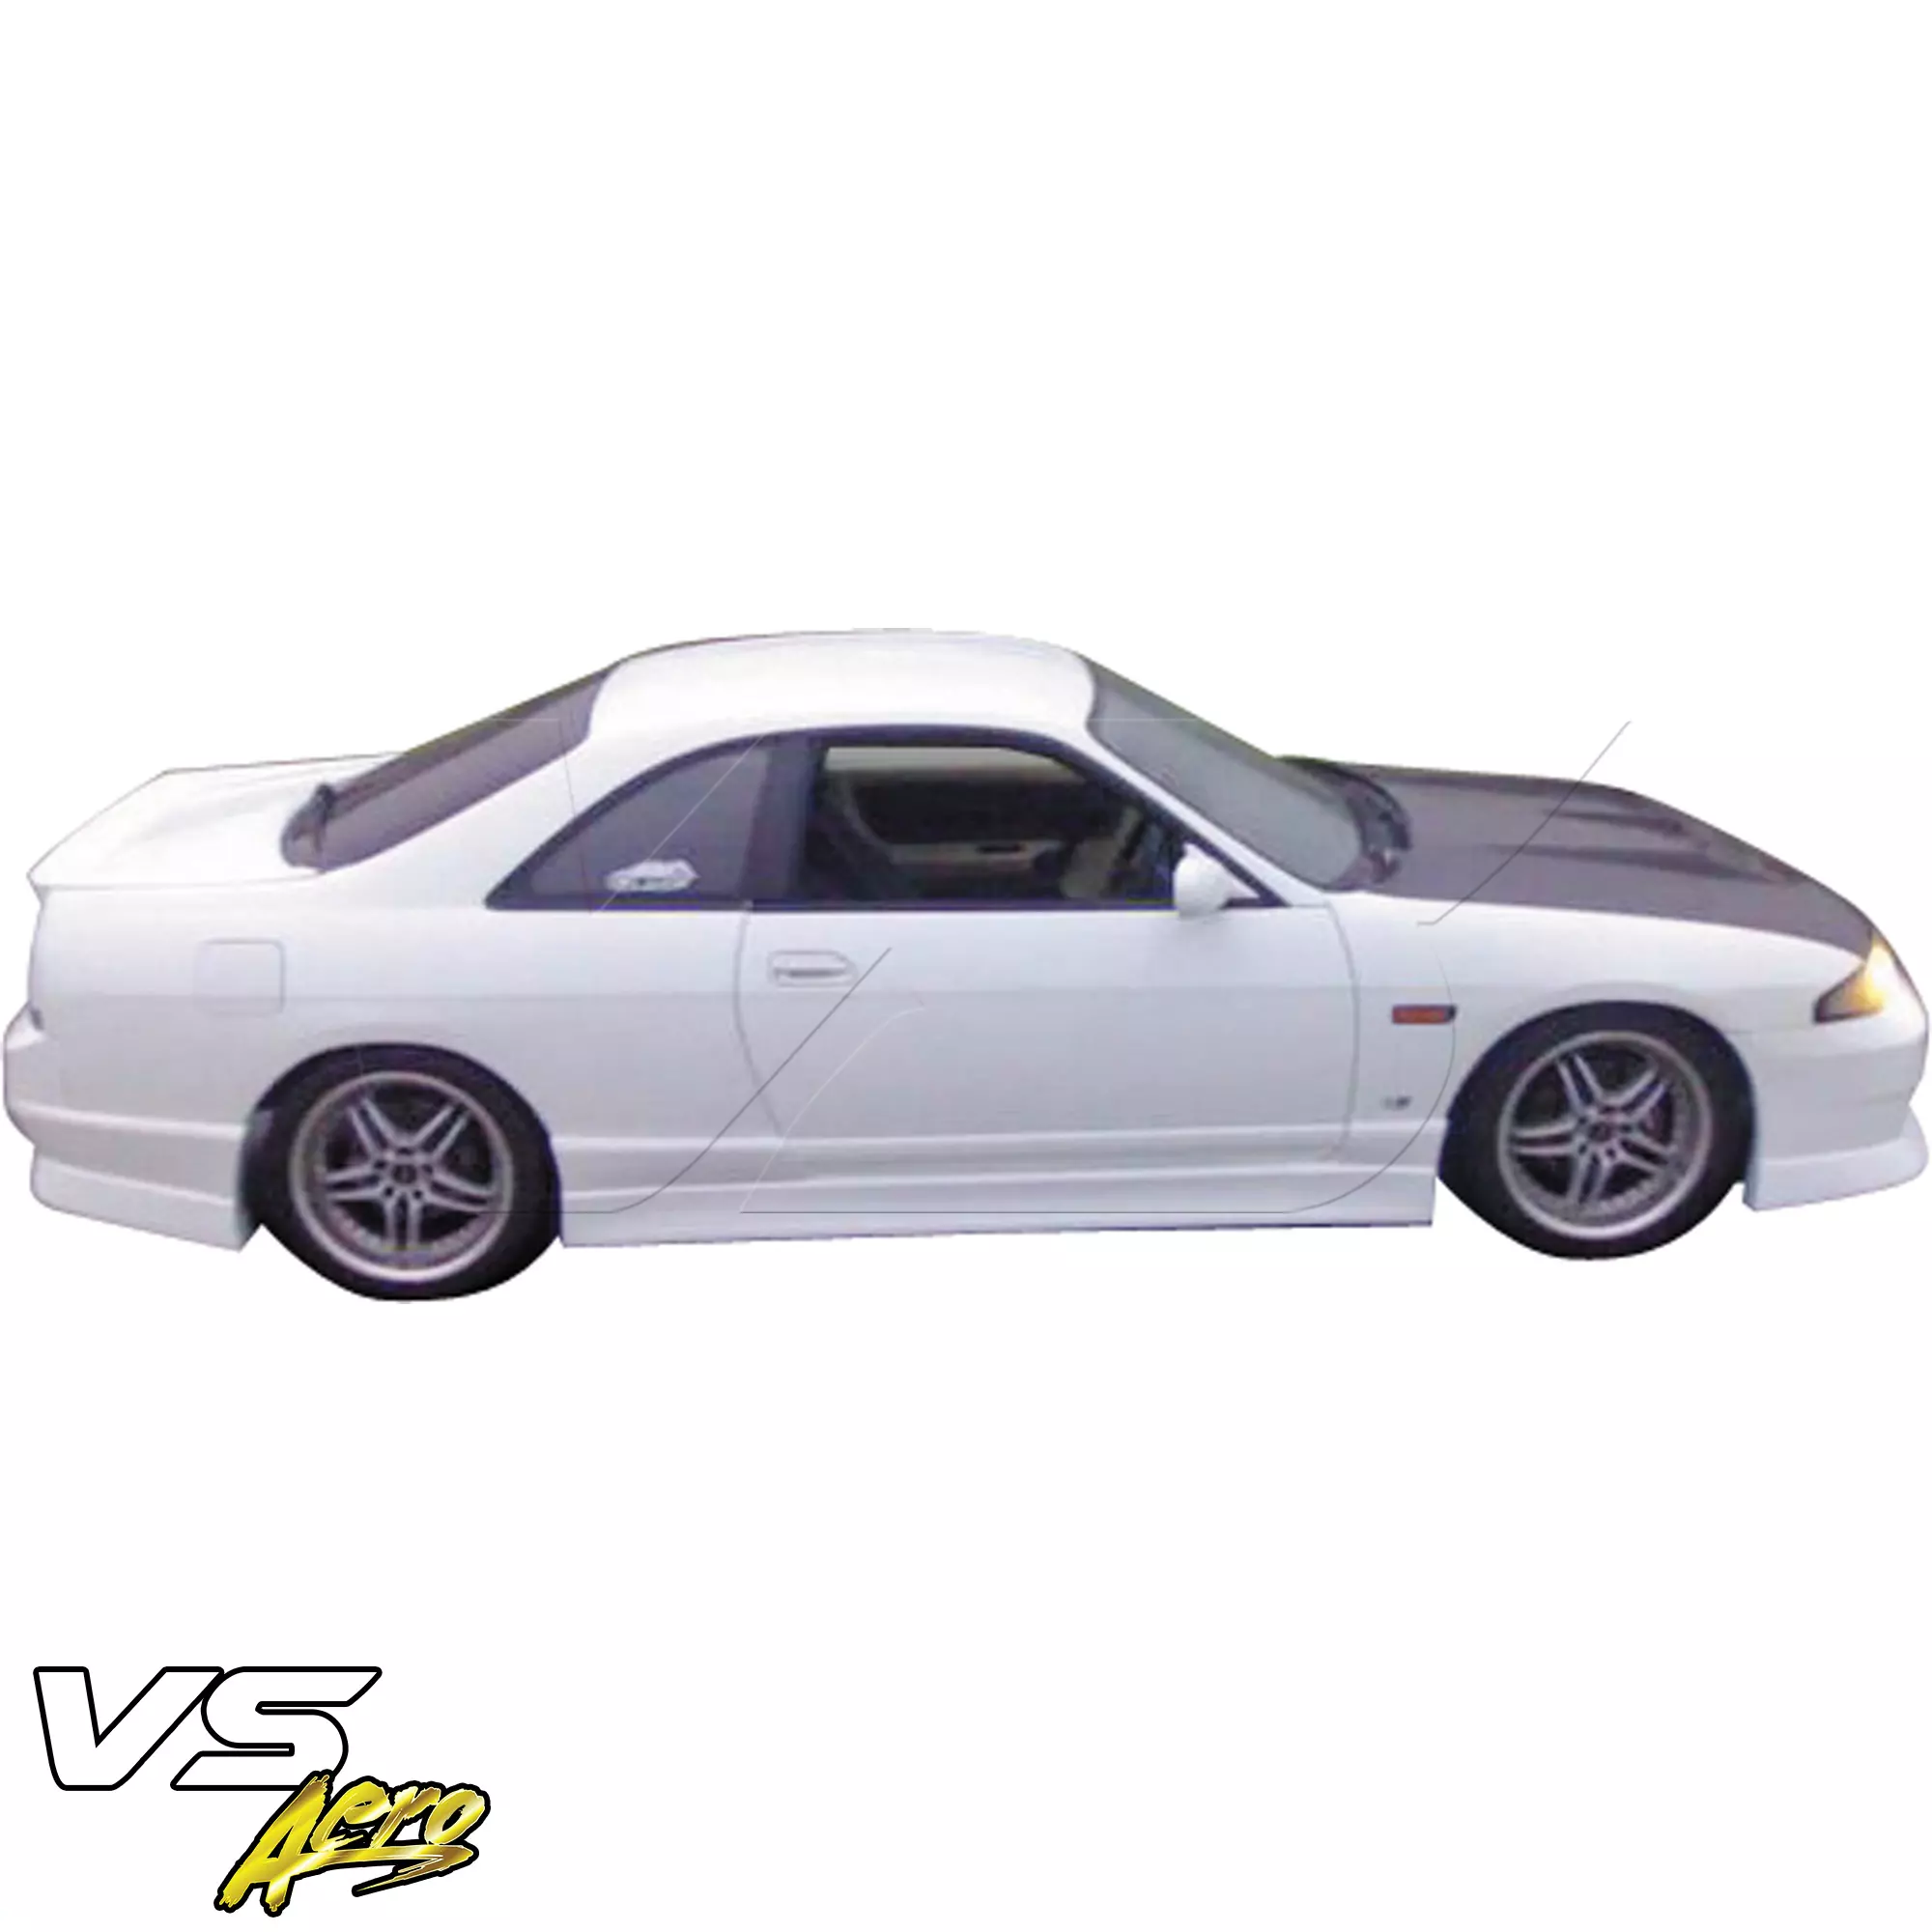 VSaero FRP MSPO v2 Body Kit 4pc > Nissan Skyline R33 GTS 1995-1998 > 2dr Coupe - Image 26